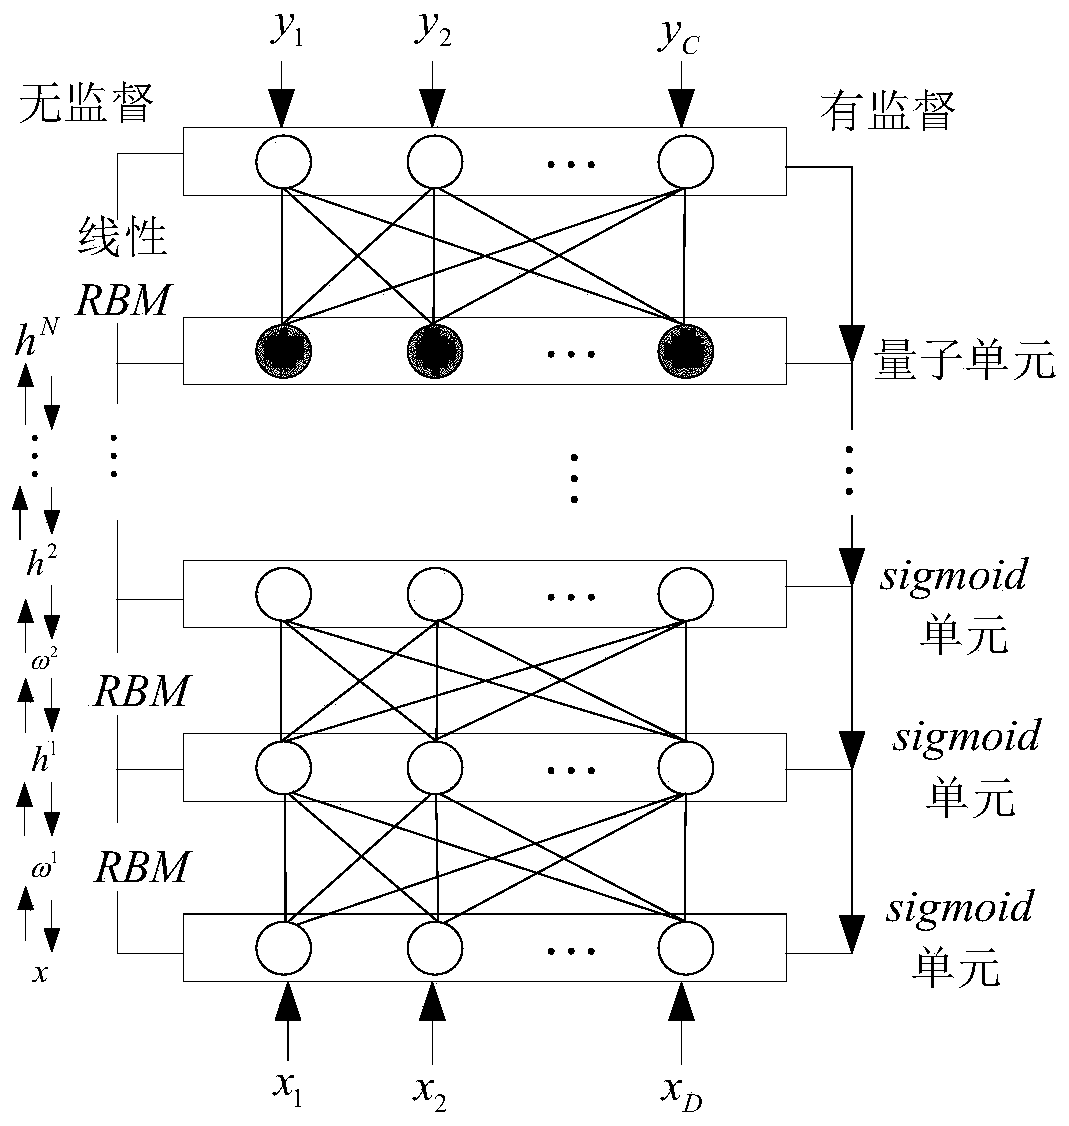 A digital signal modulation mode identification method